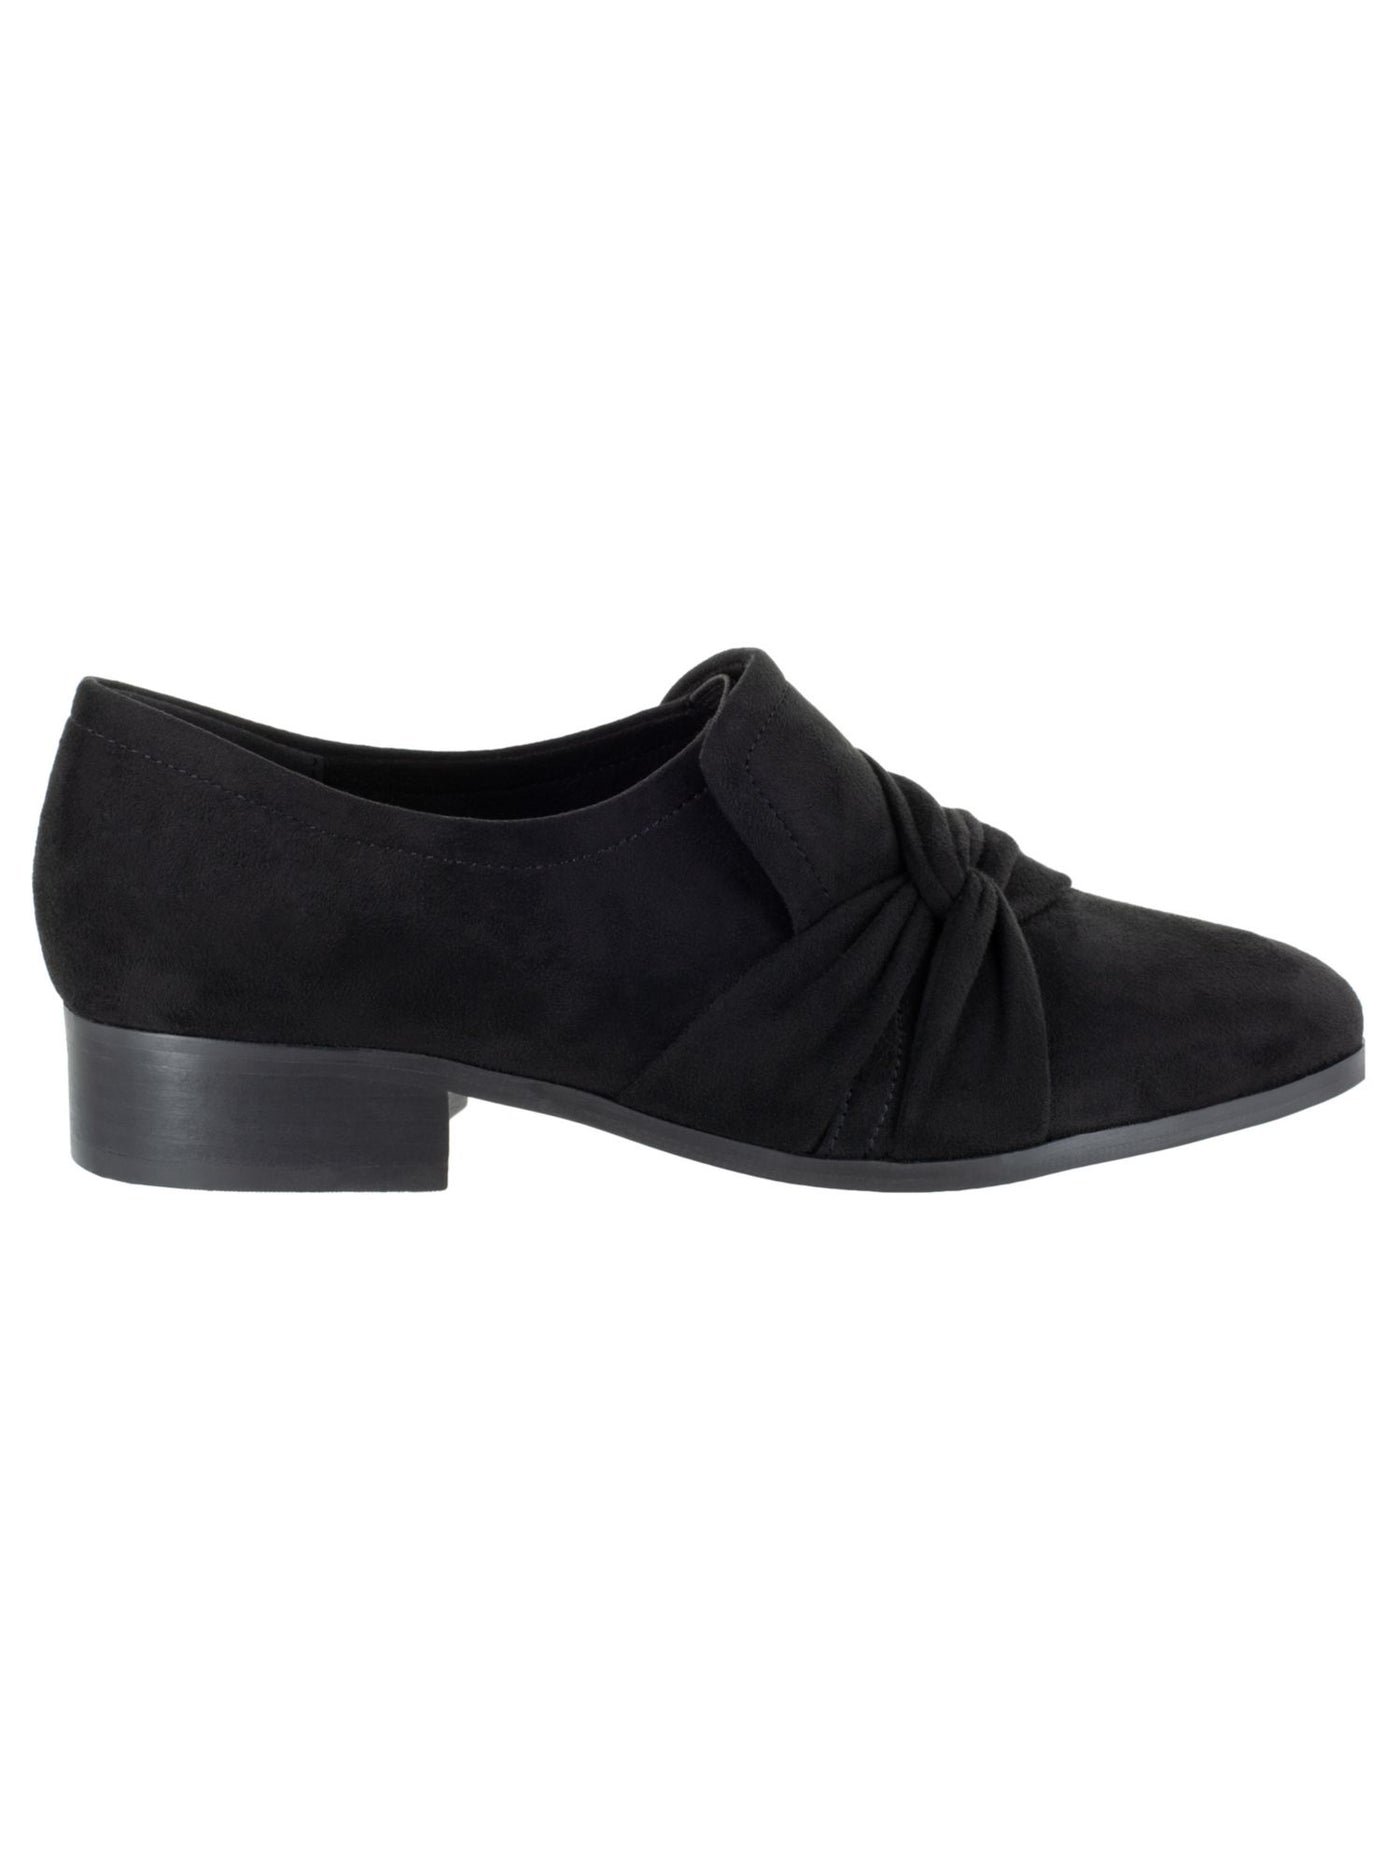 BELLA VITA Womens Black Twisted Detail Padded Comfort Billie Ii Almond Toe Block Heel Slip On Loafers Shoes 9 M